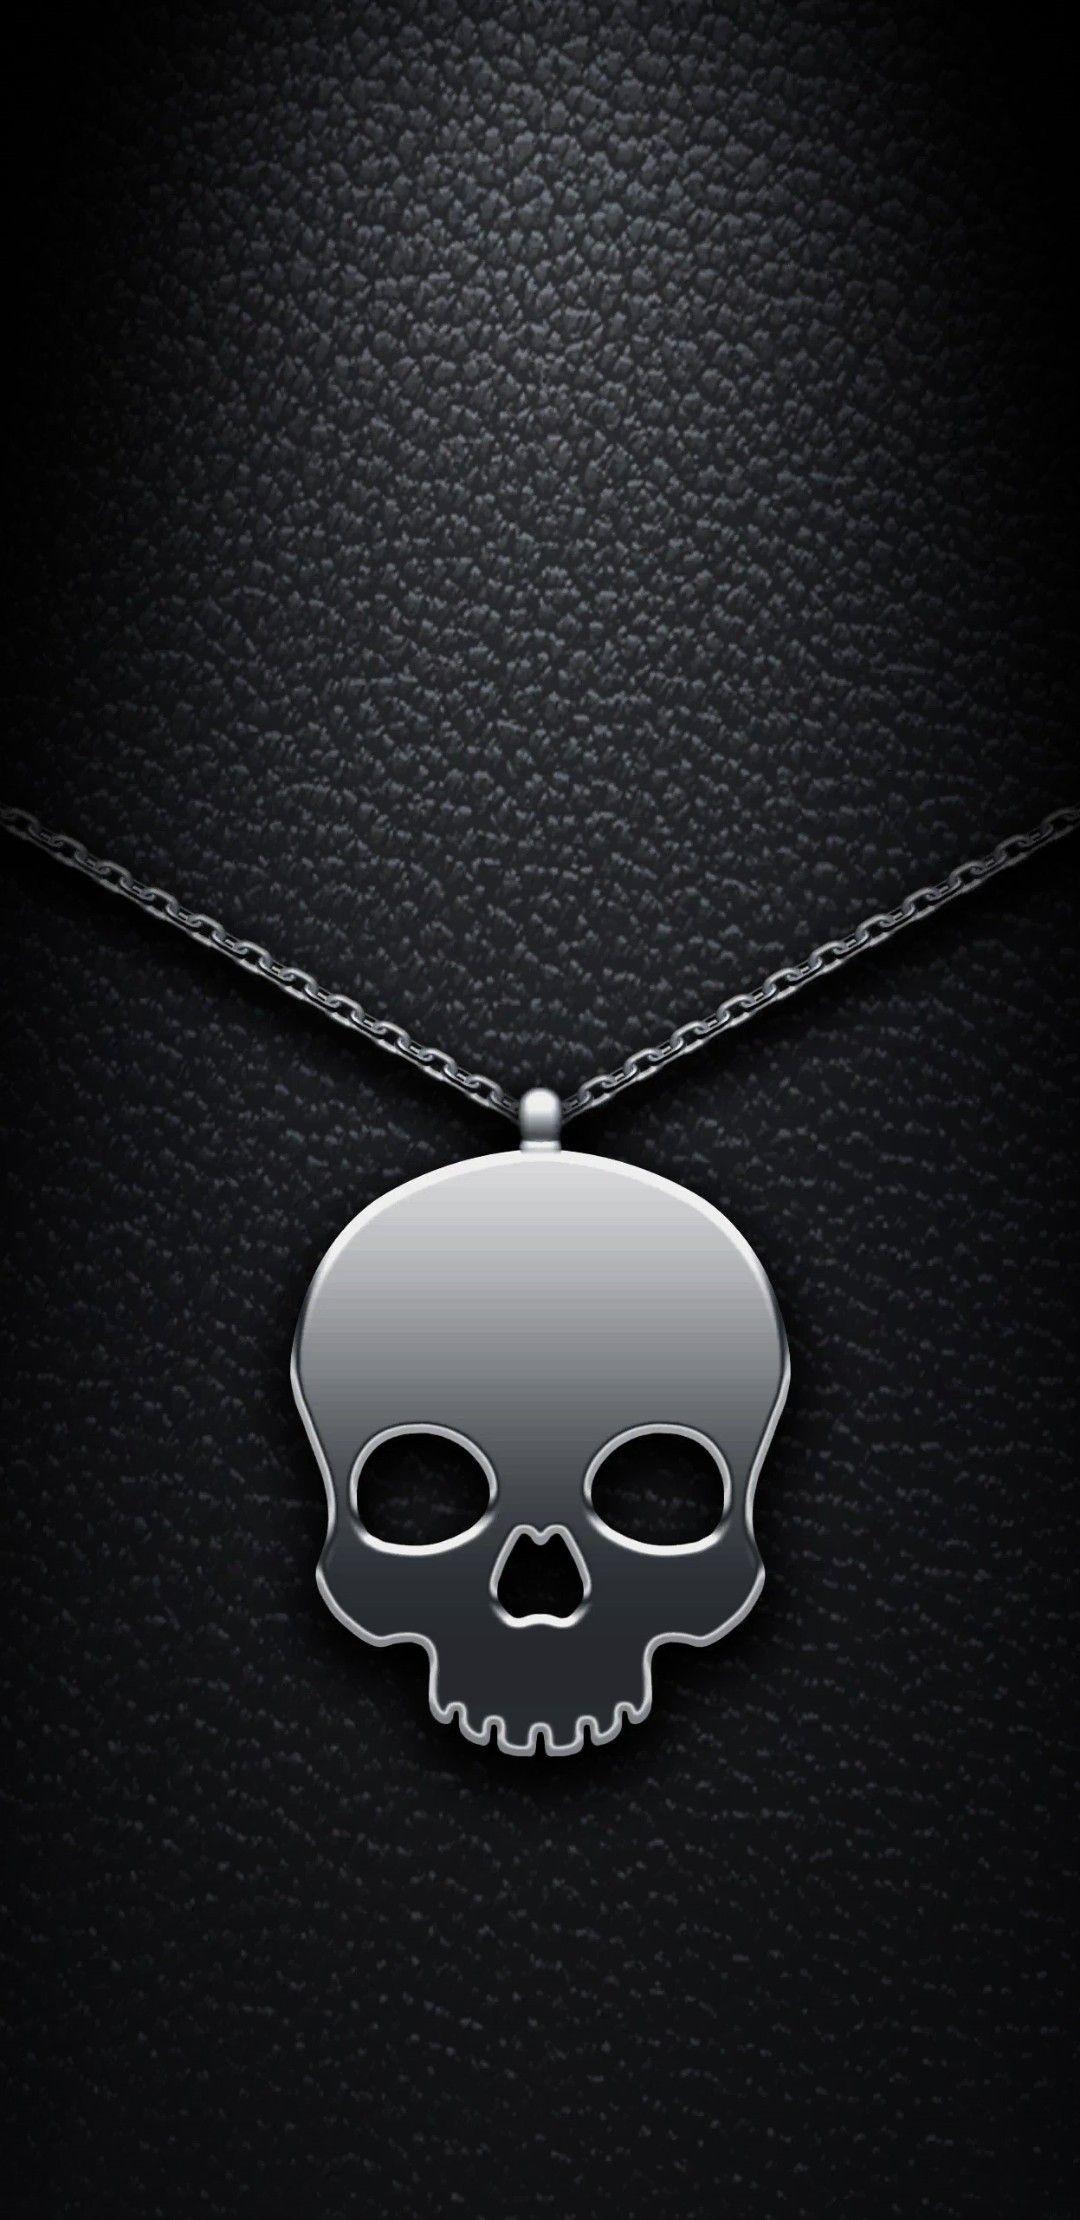 Chain Skull iPhone Wallpaper Free Chain Skull iPhone